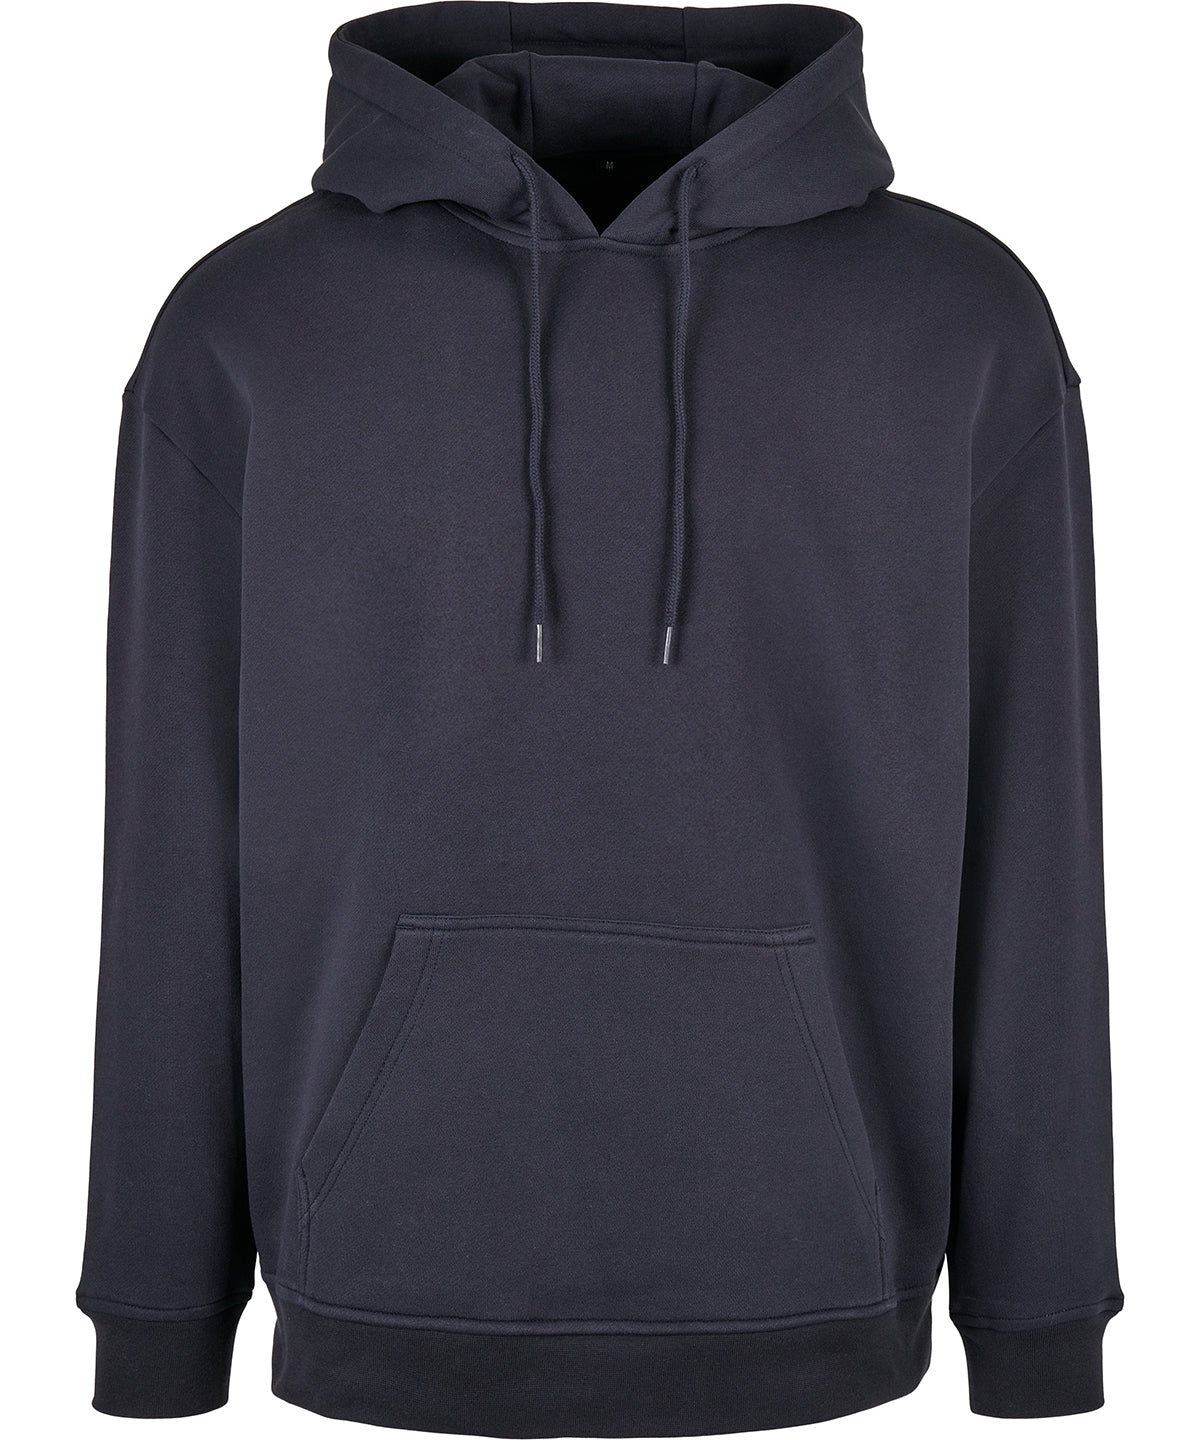 Basic oversize hoodie